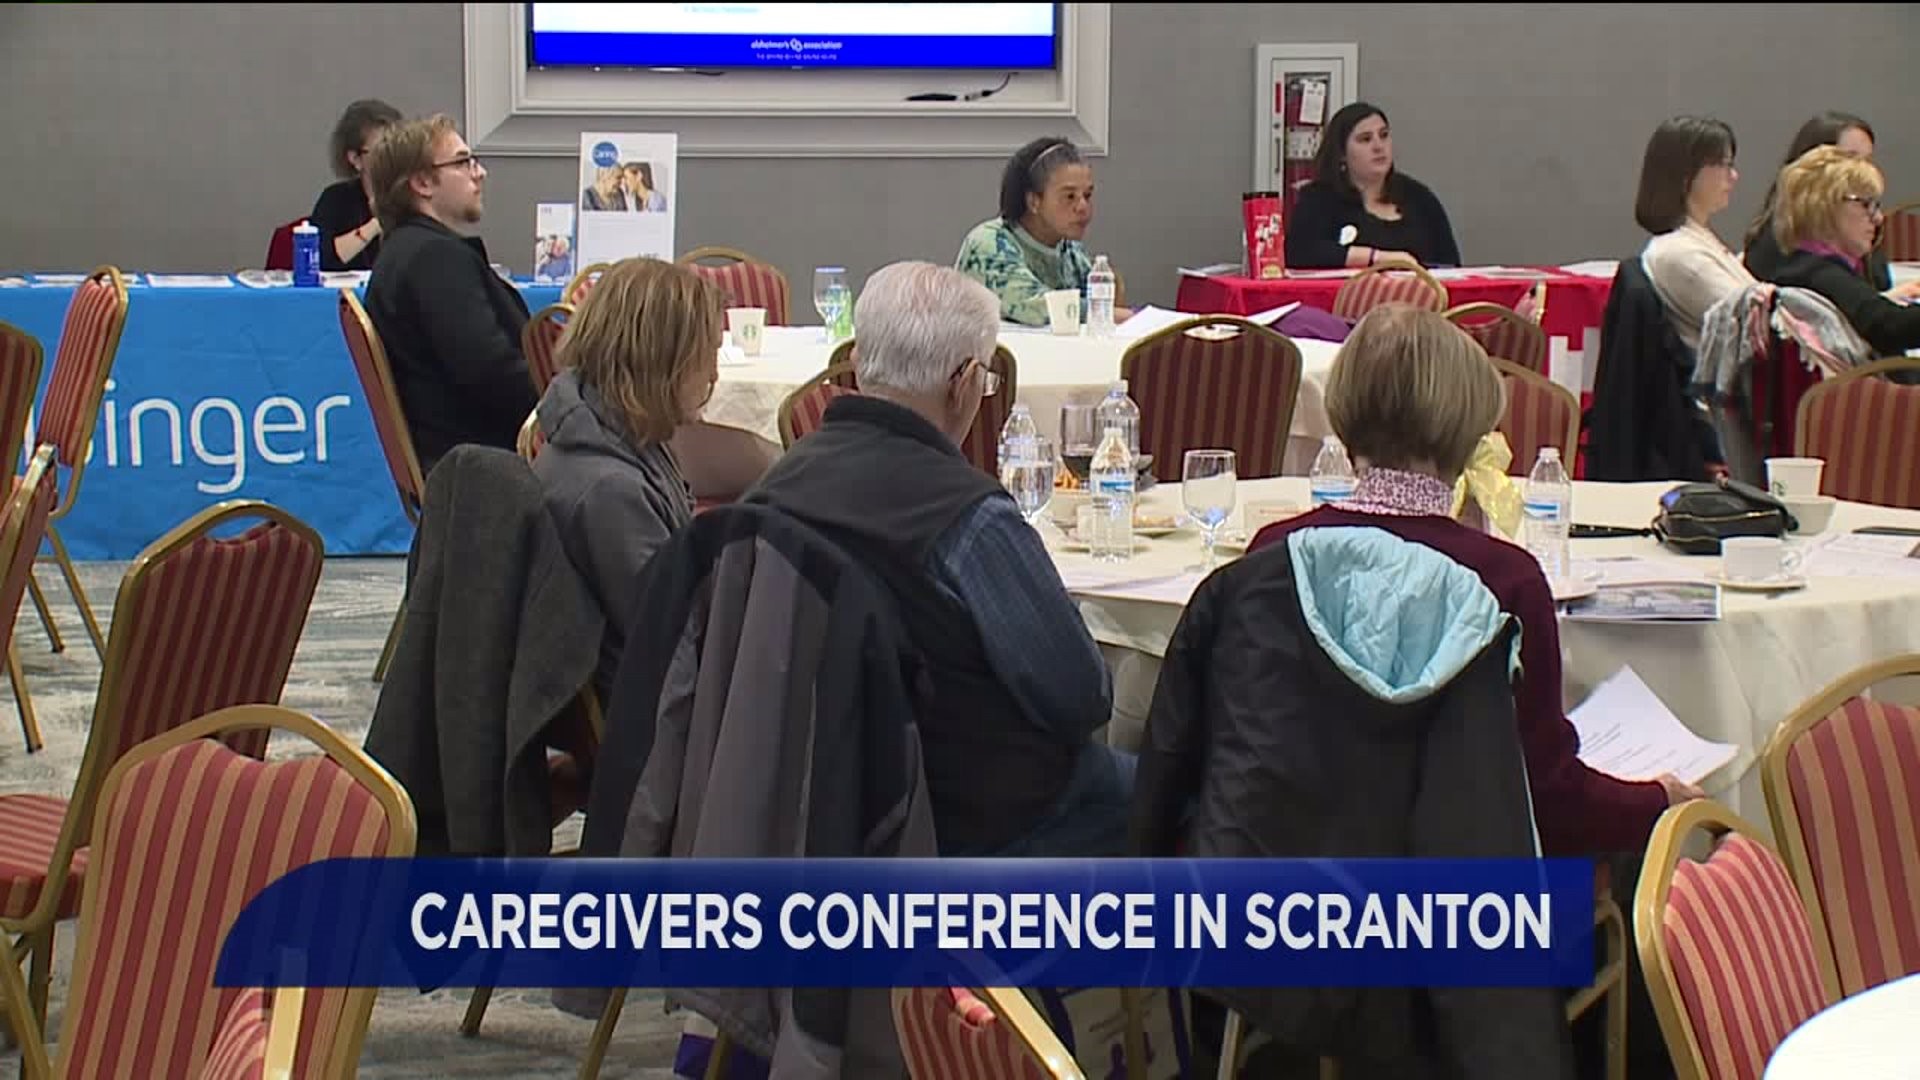 Caregivers Conference Held in Scranton